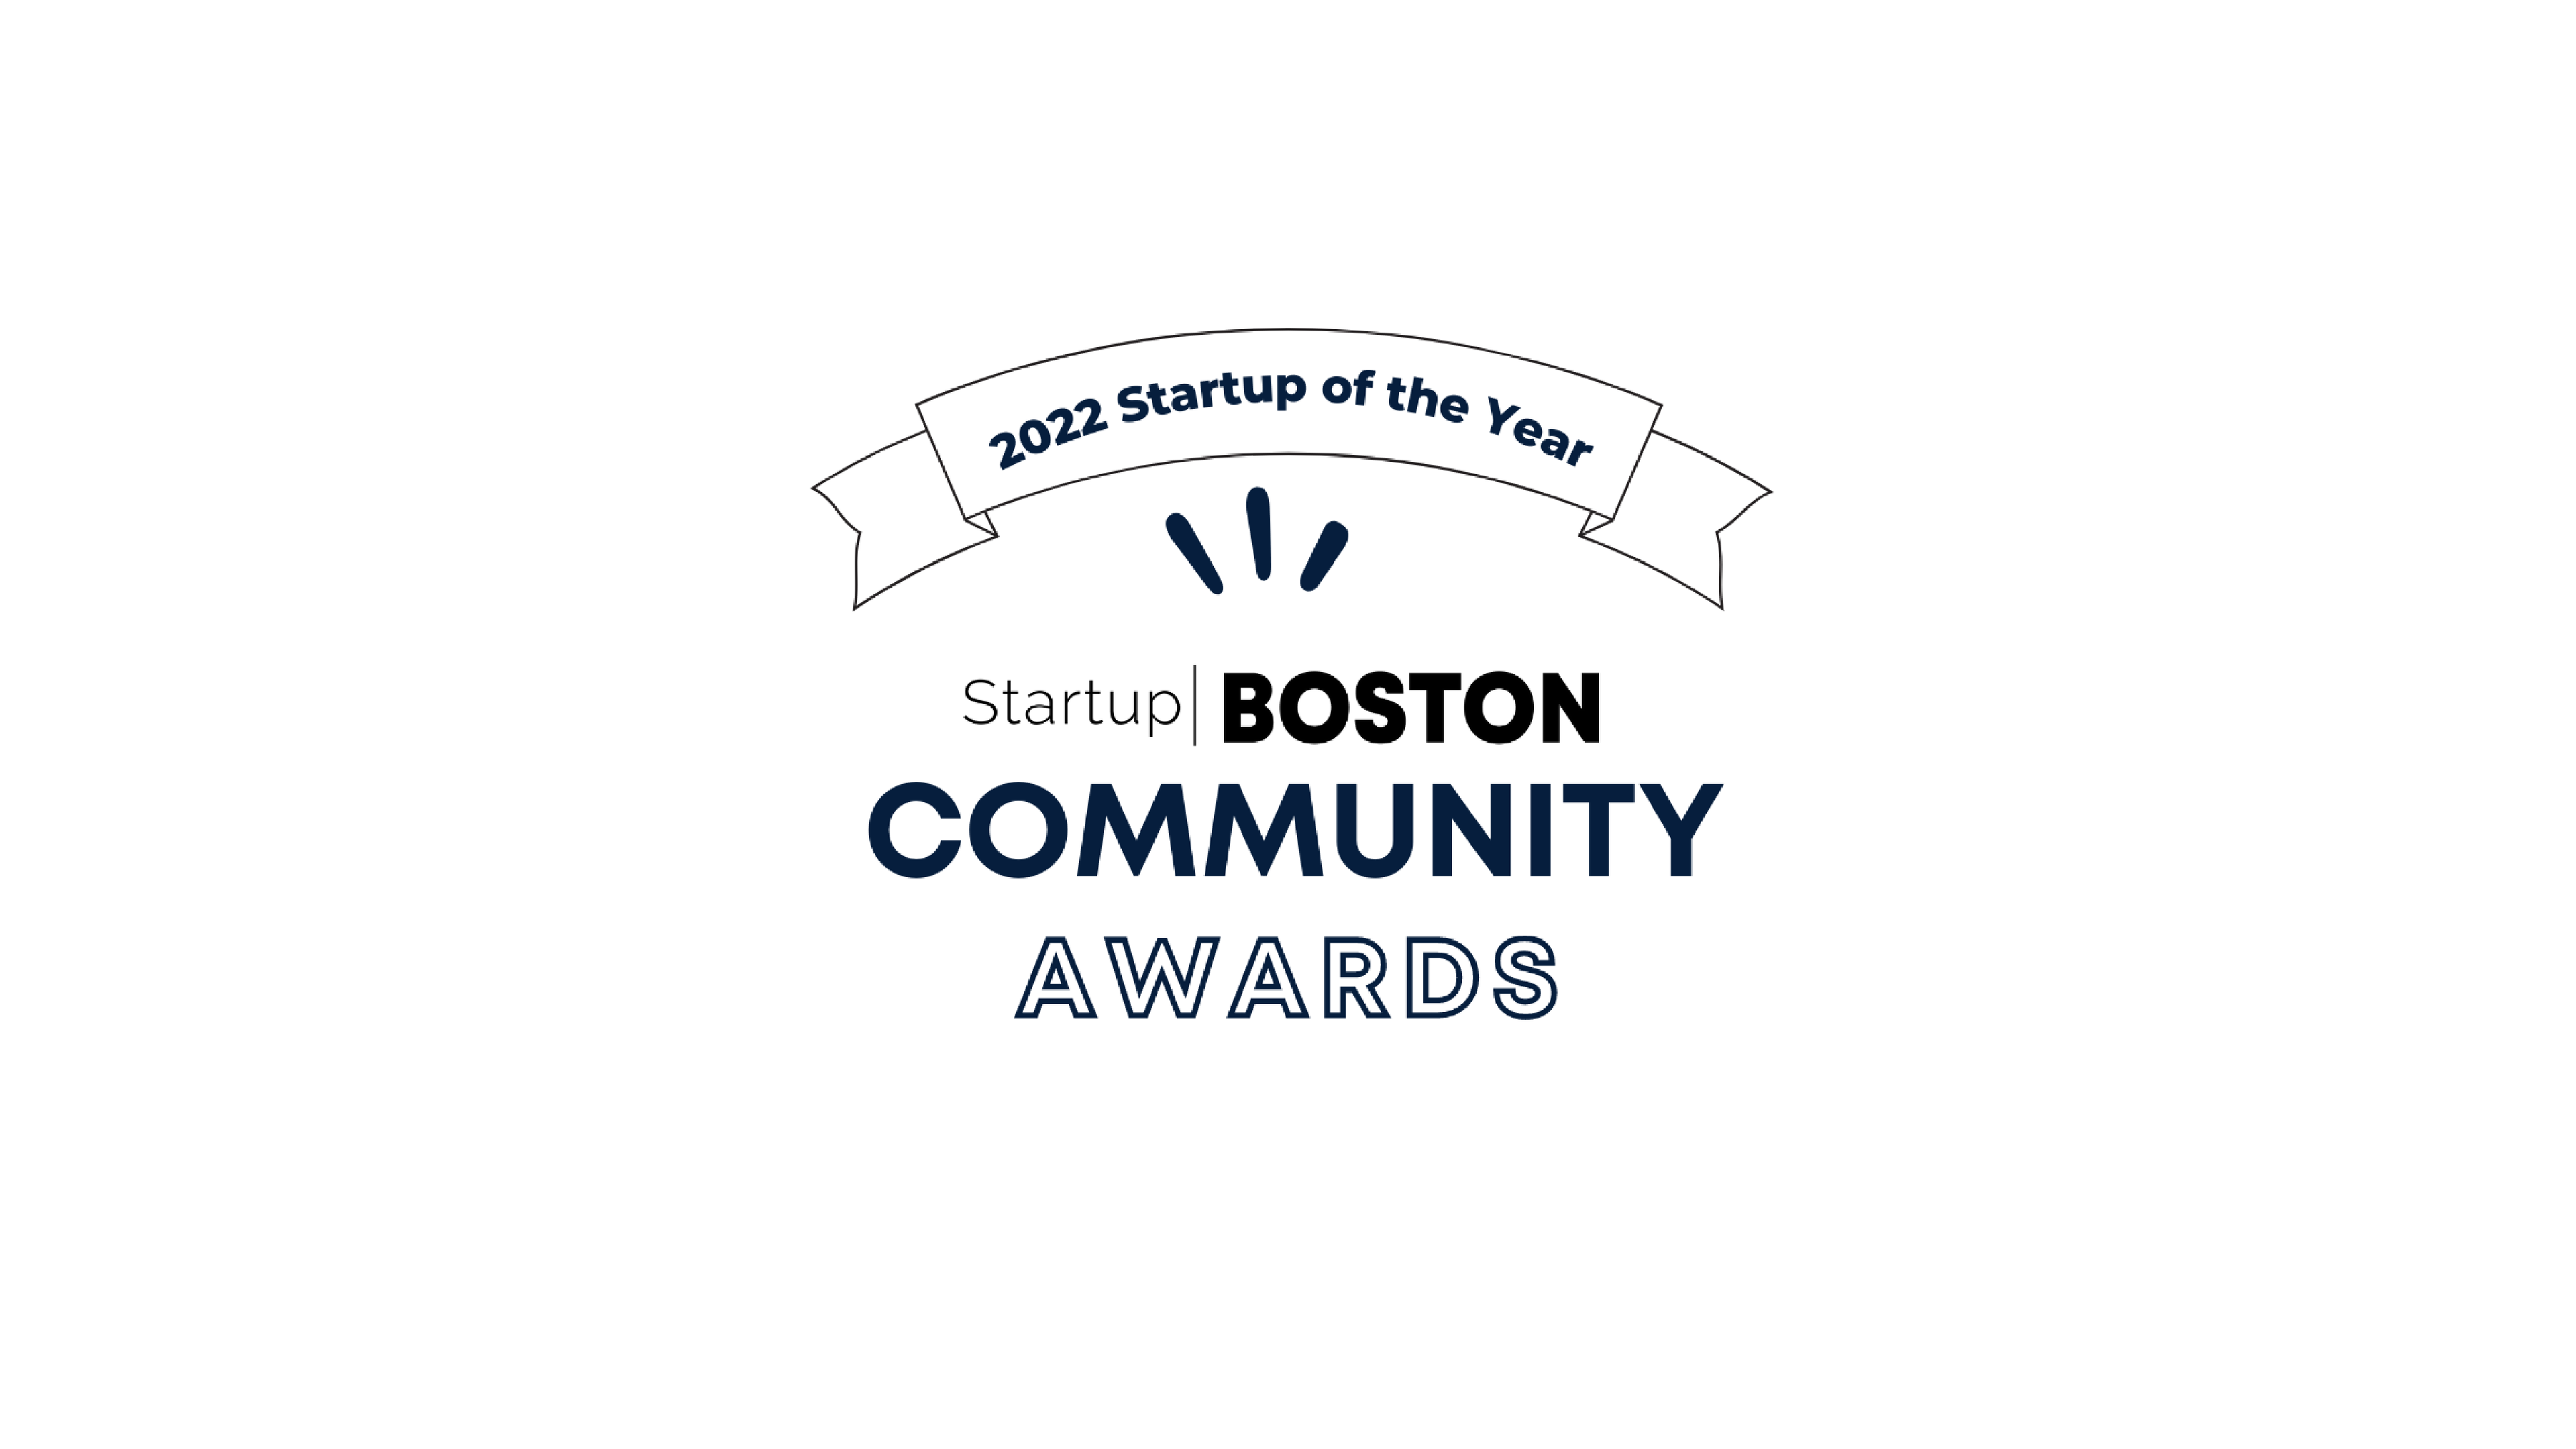 Startup Boston Community Awards 2022